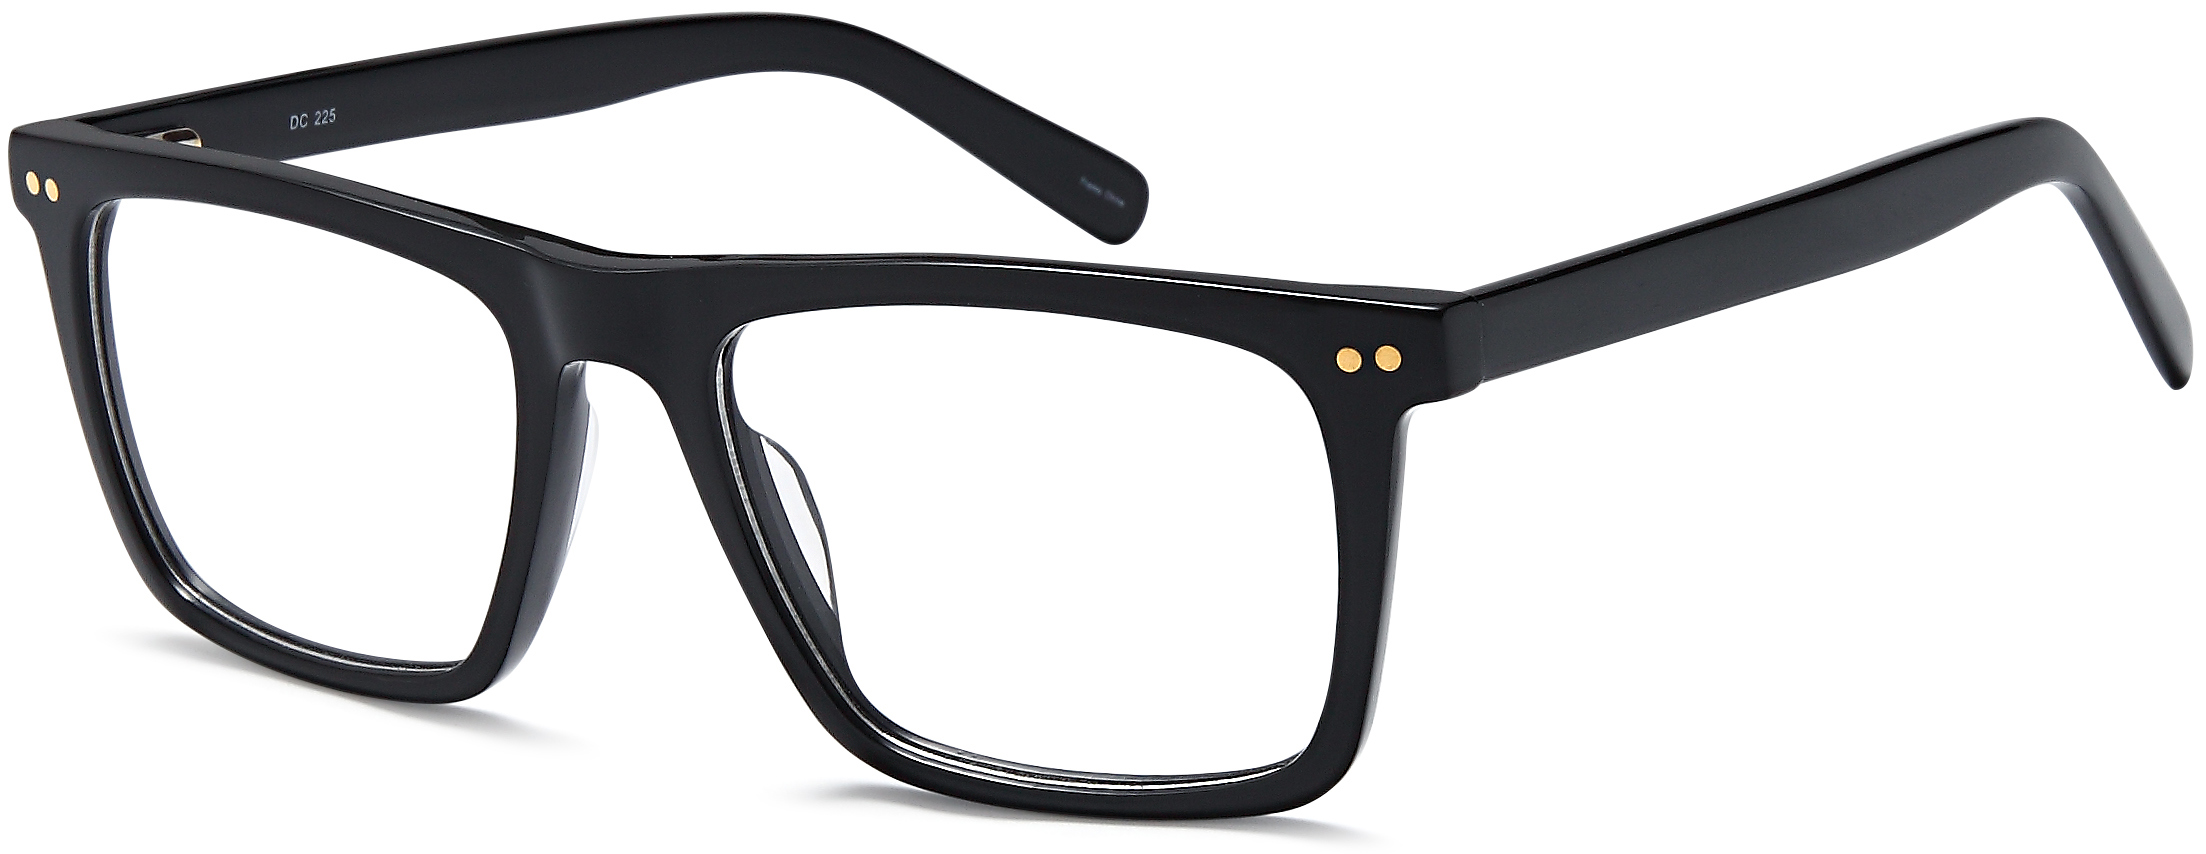 Picture of Di Caprio Eyeglasses DC225